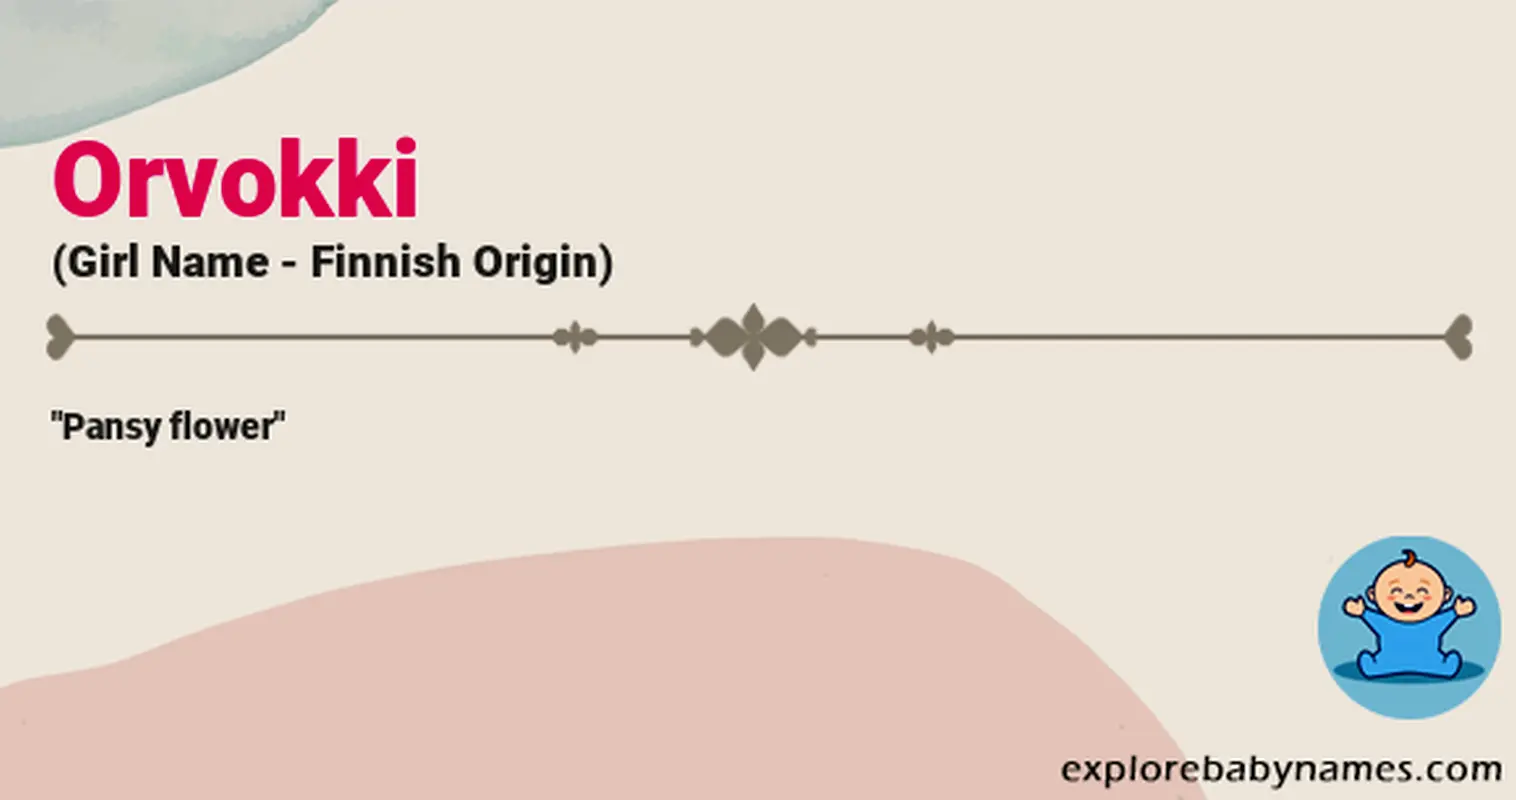 Meaning of Orvokki